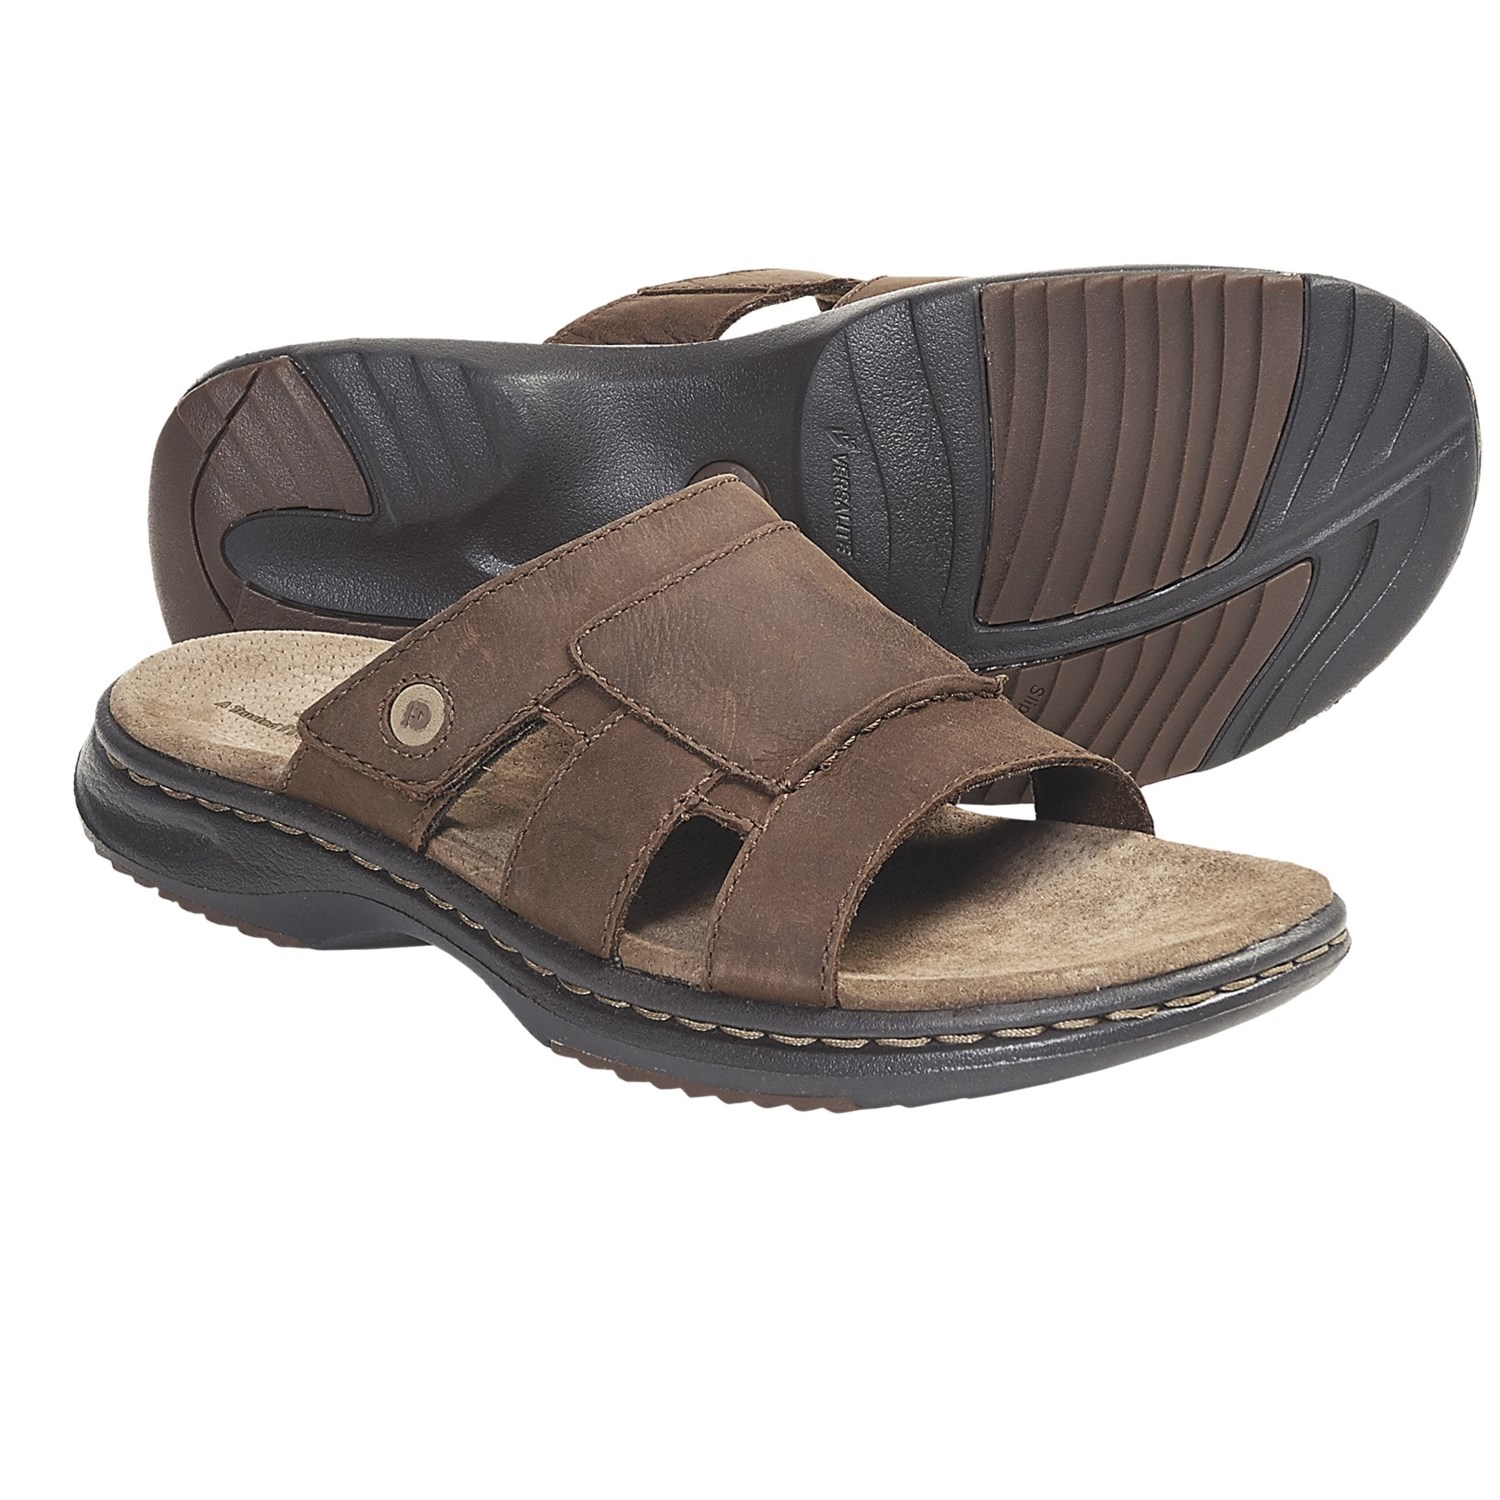 Leather Sandals For Men 98